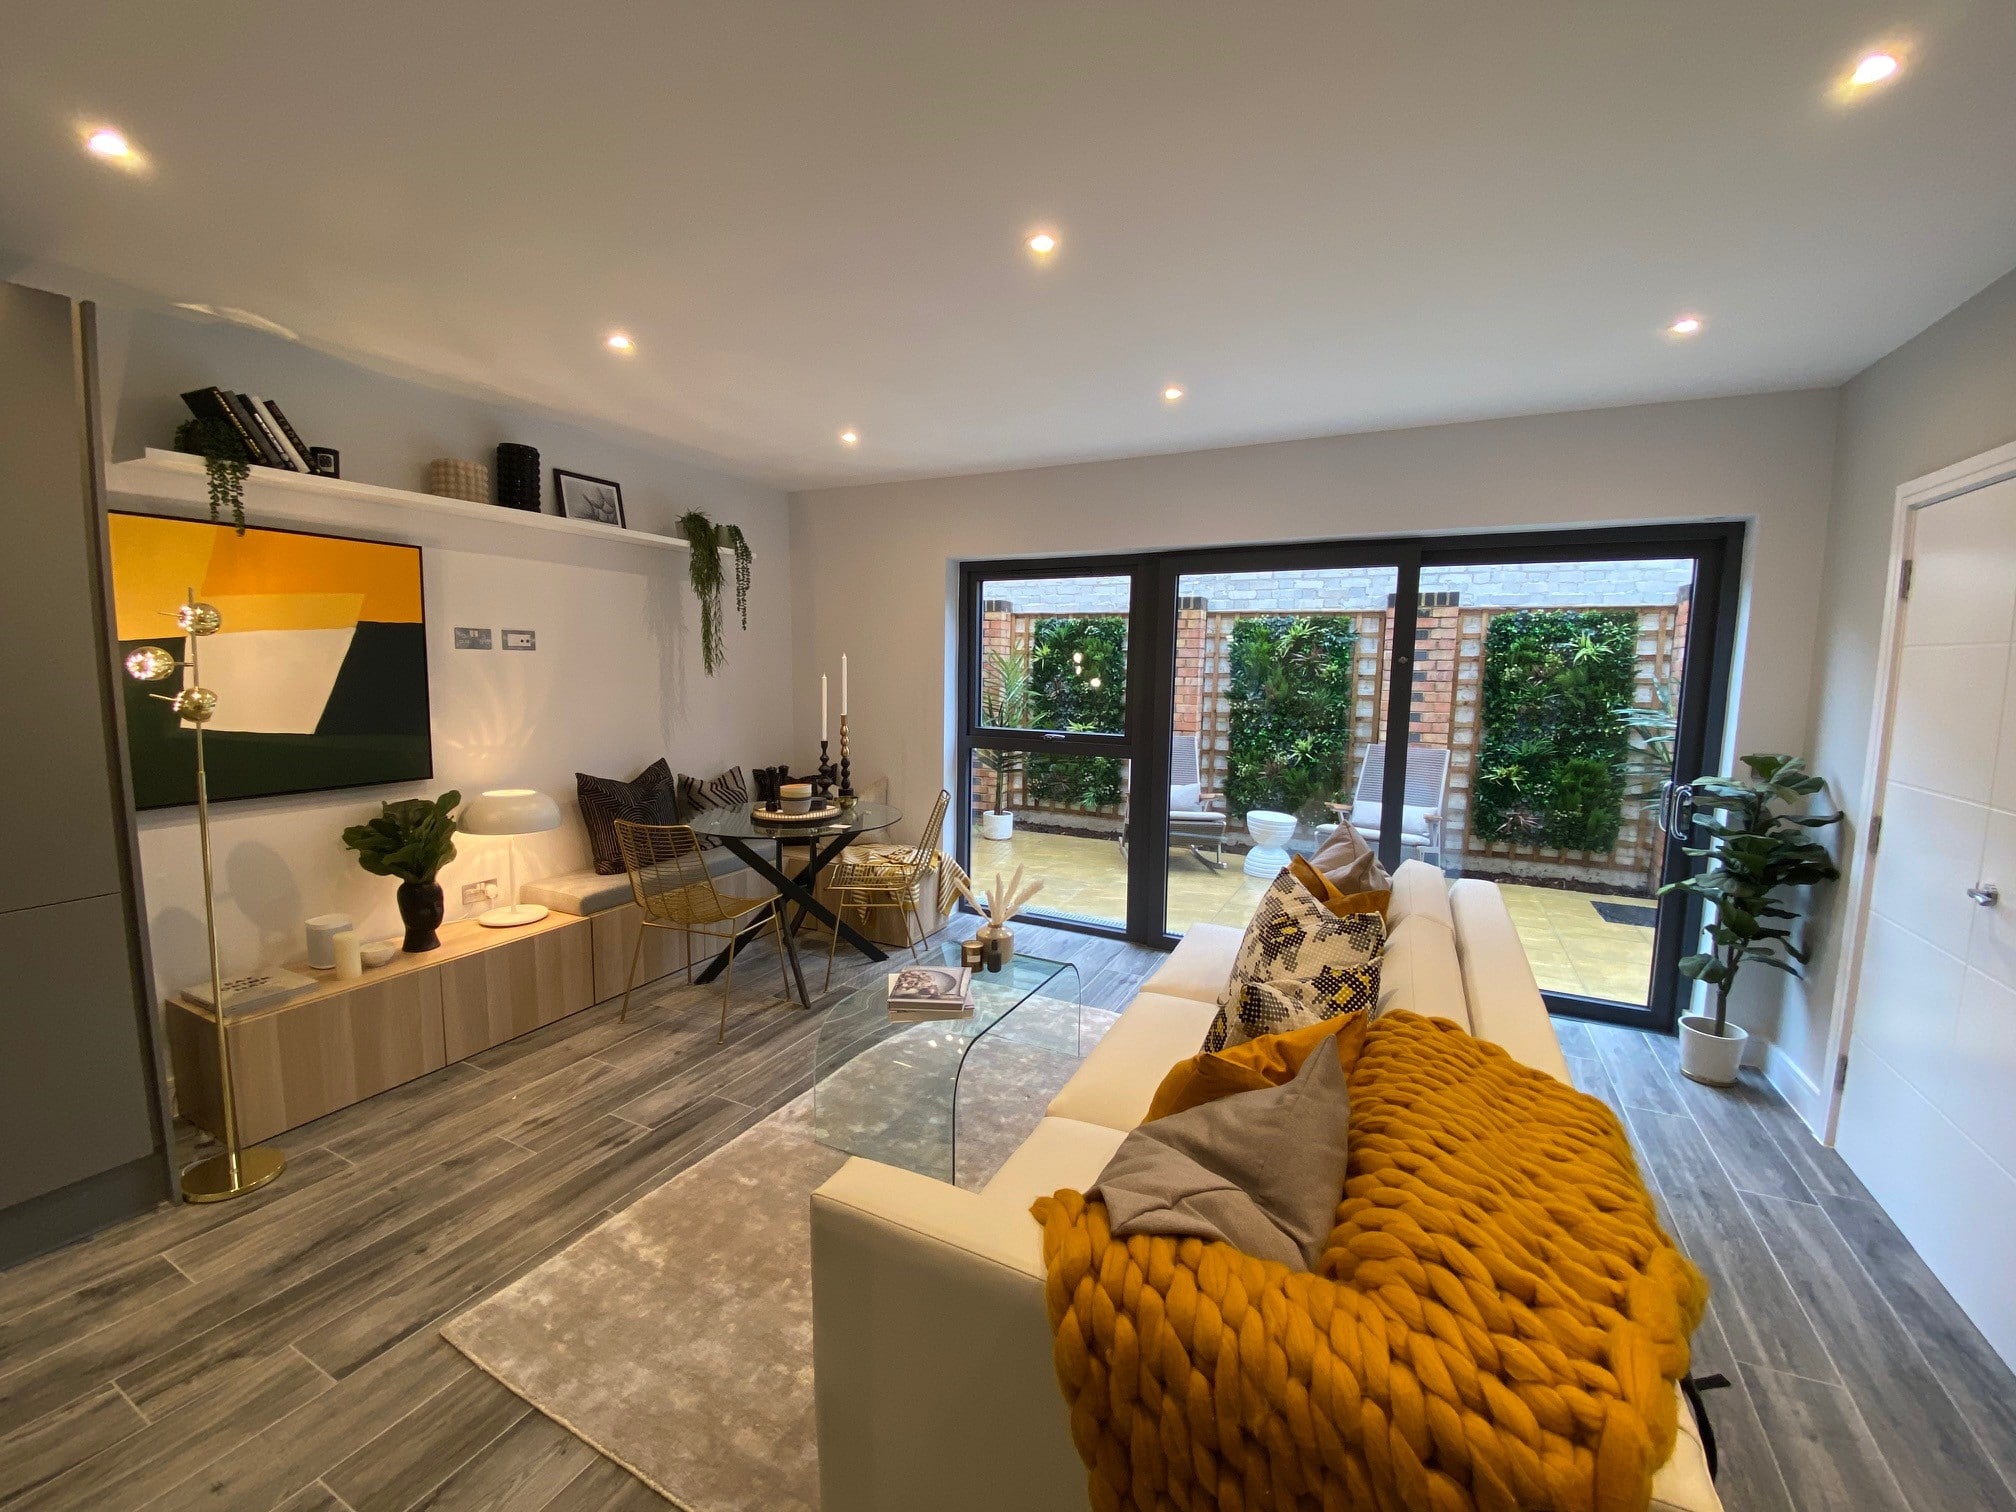 Interior design – Hammerton Row